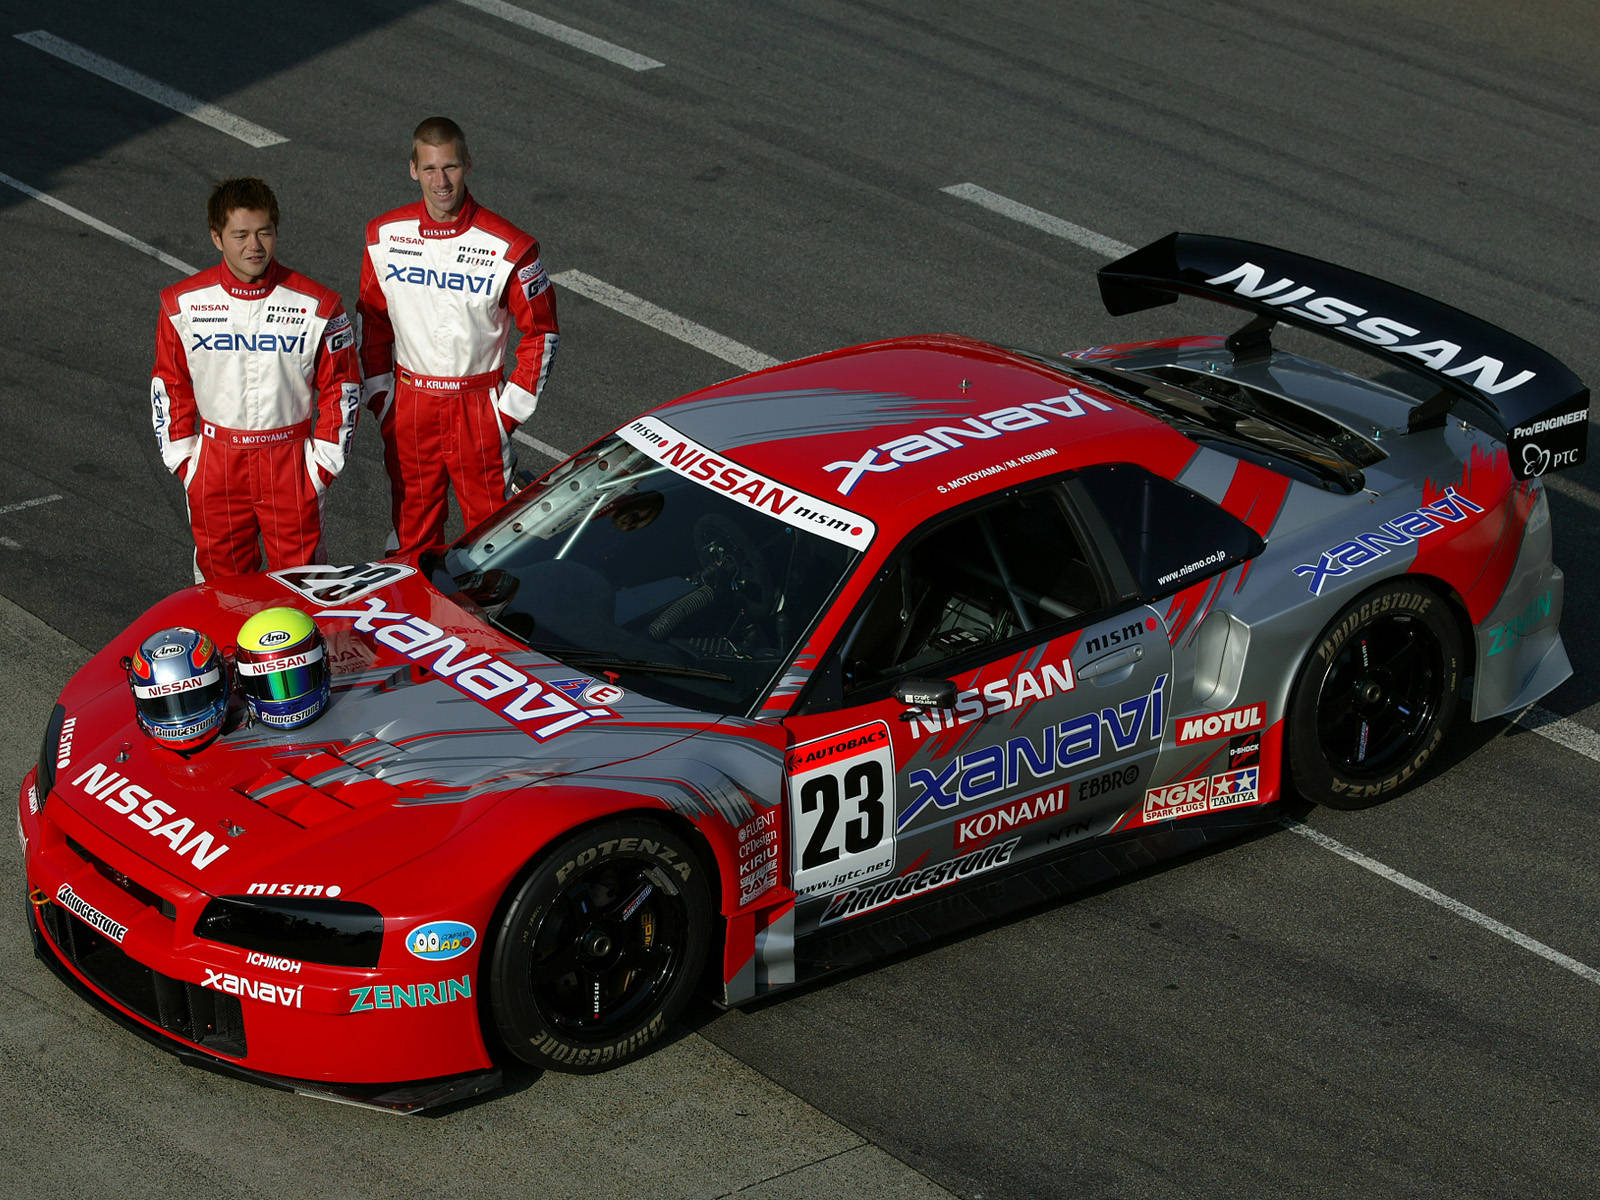 Captivating Shot Of Skyline Car In 2003 Championship